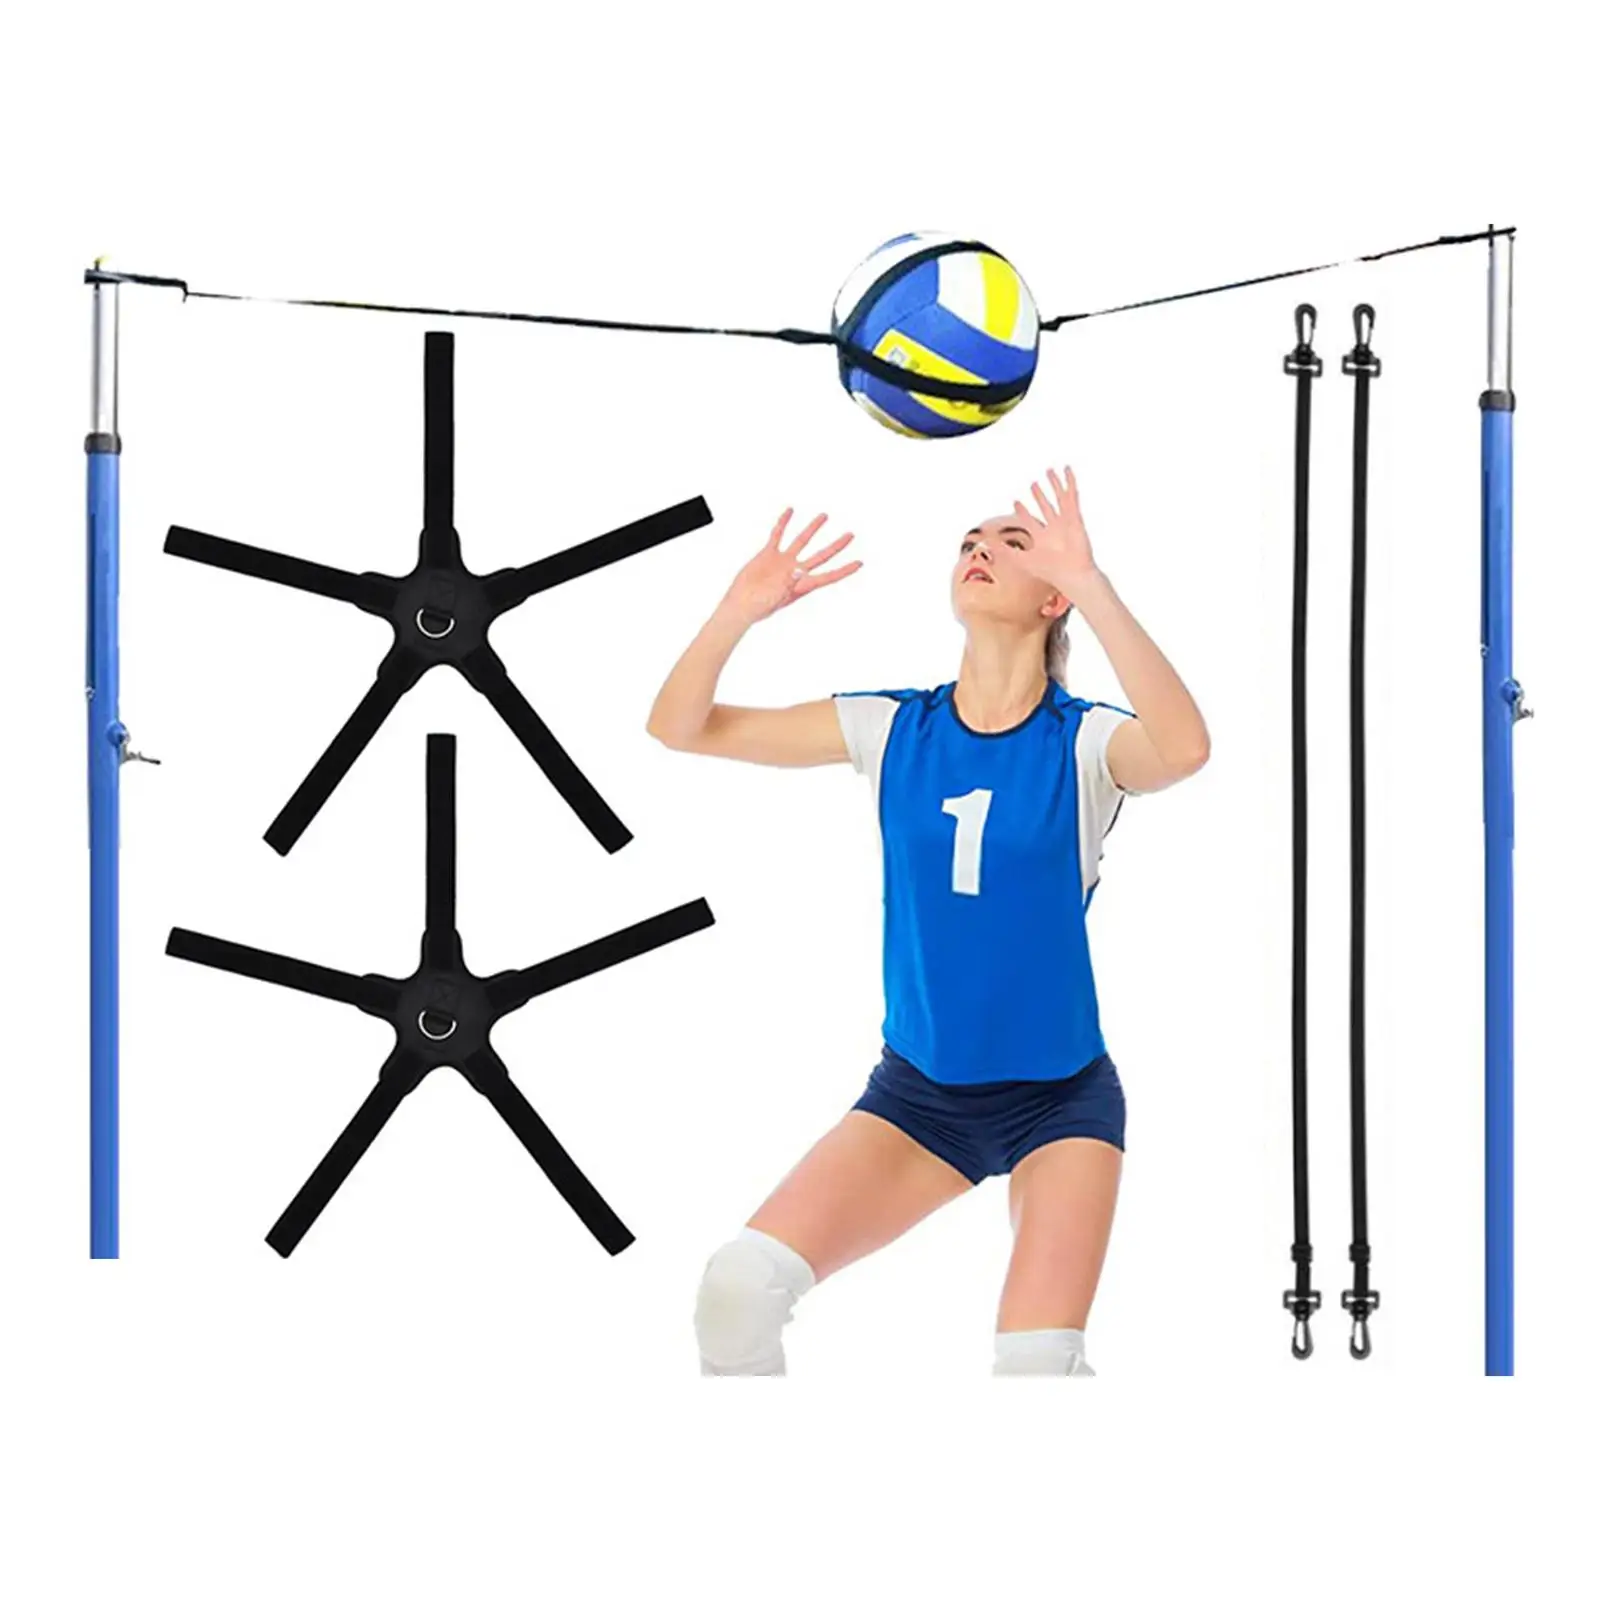 Volleyball Training Equipment Training Belt for Beginners Improves Serving